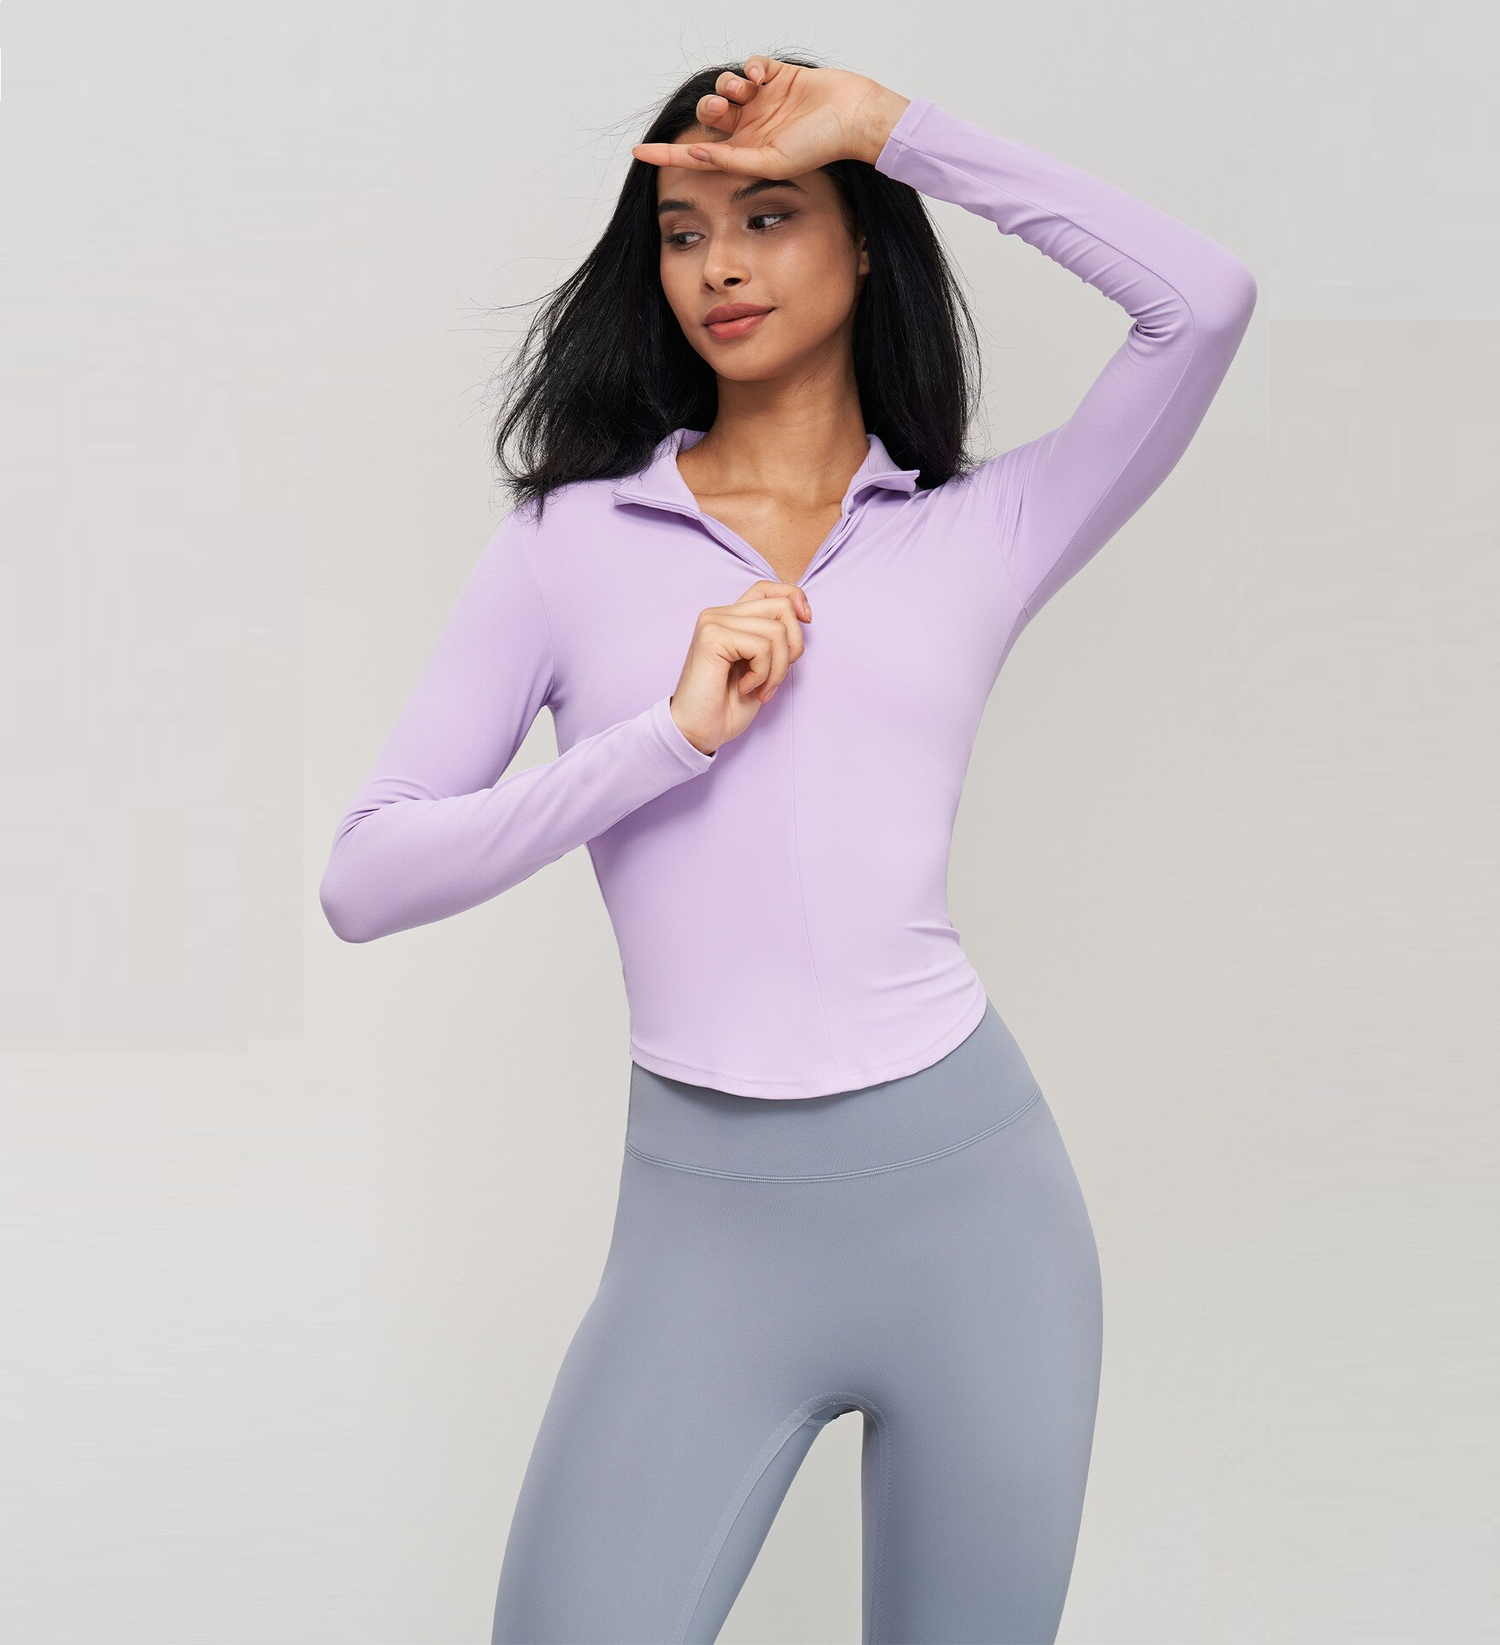 Women's Yoga & Fitness Clothing | Her Yoga Store